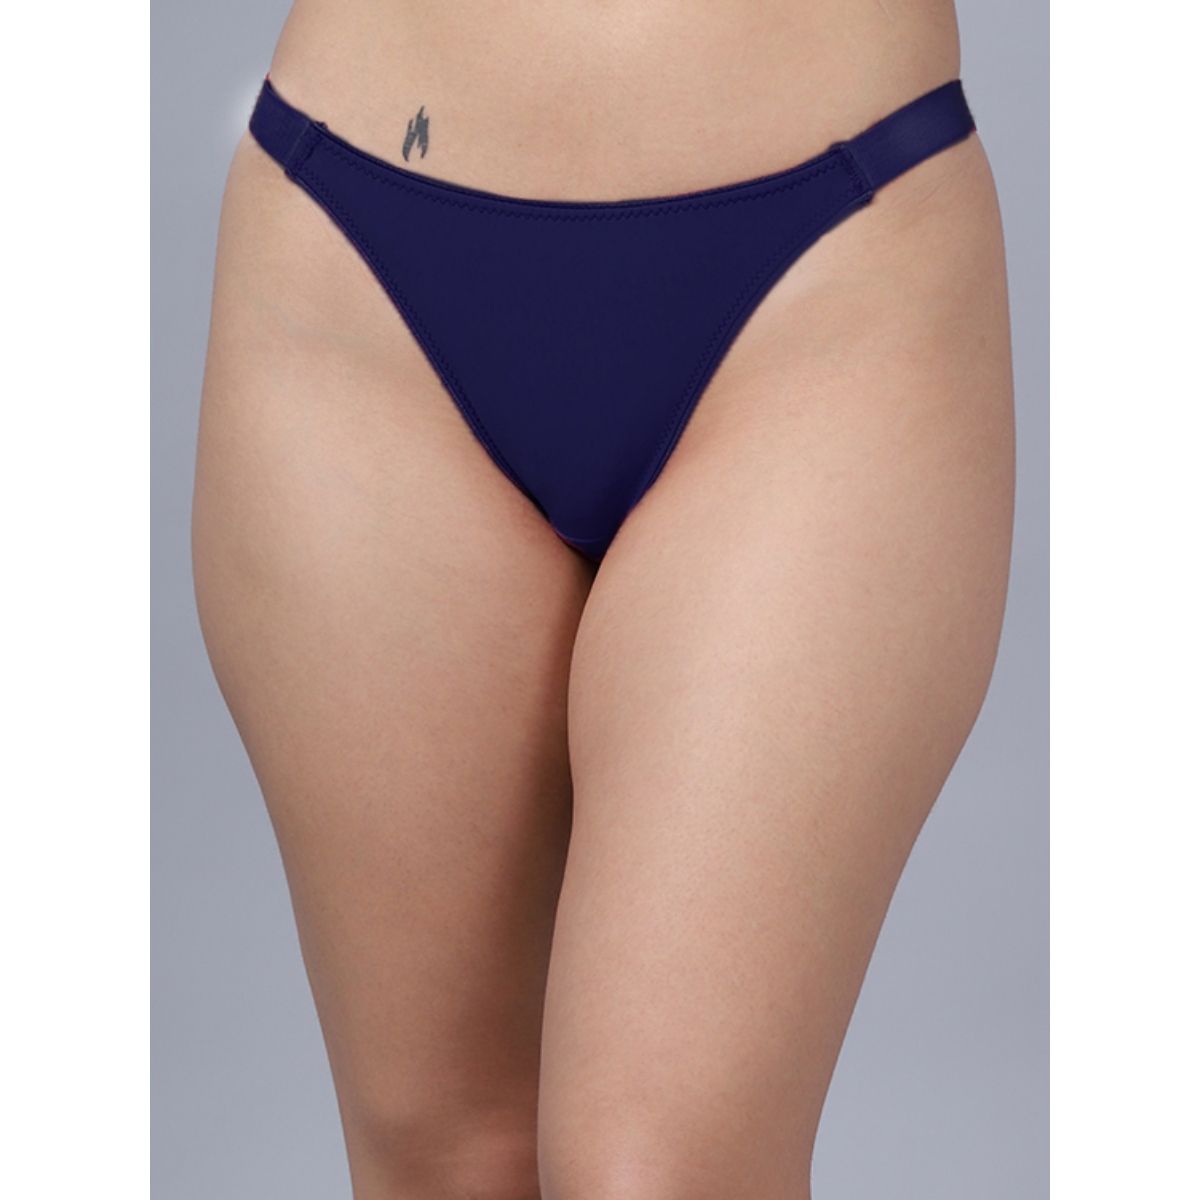 Buy Erotissch Women Blue Solid Thong Panty Briefs Online